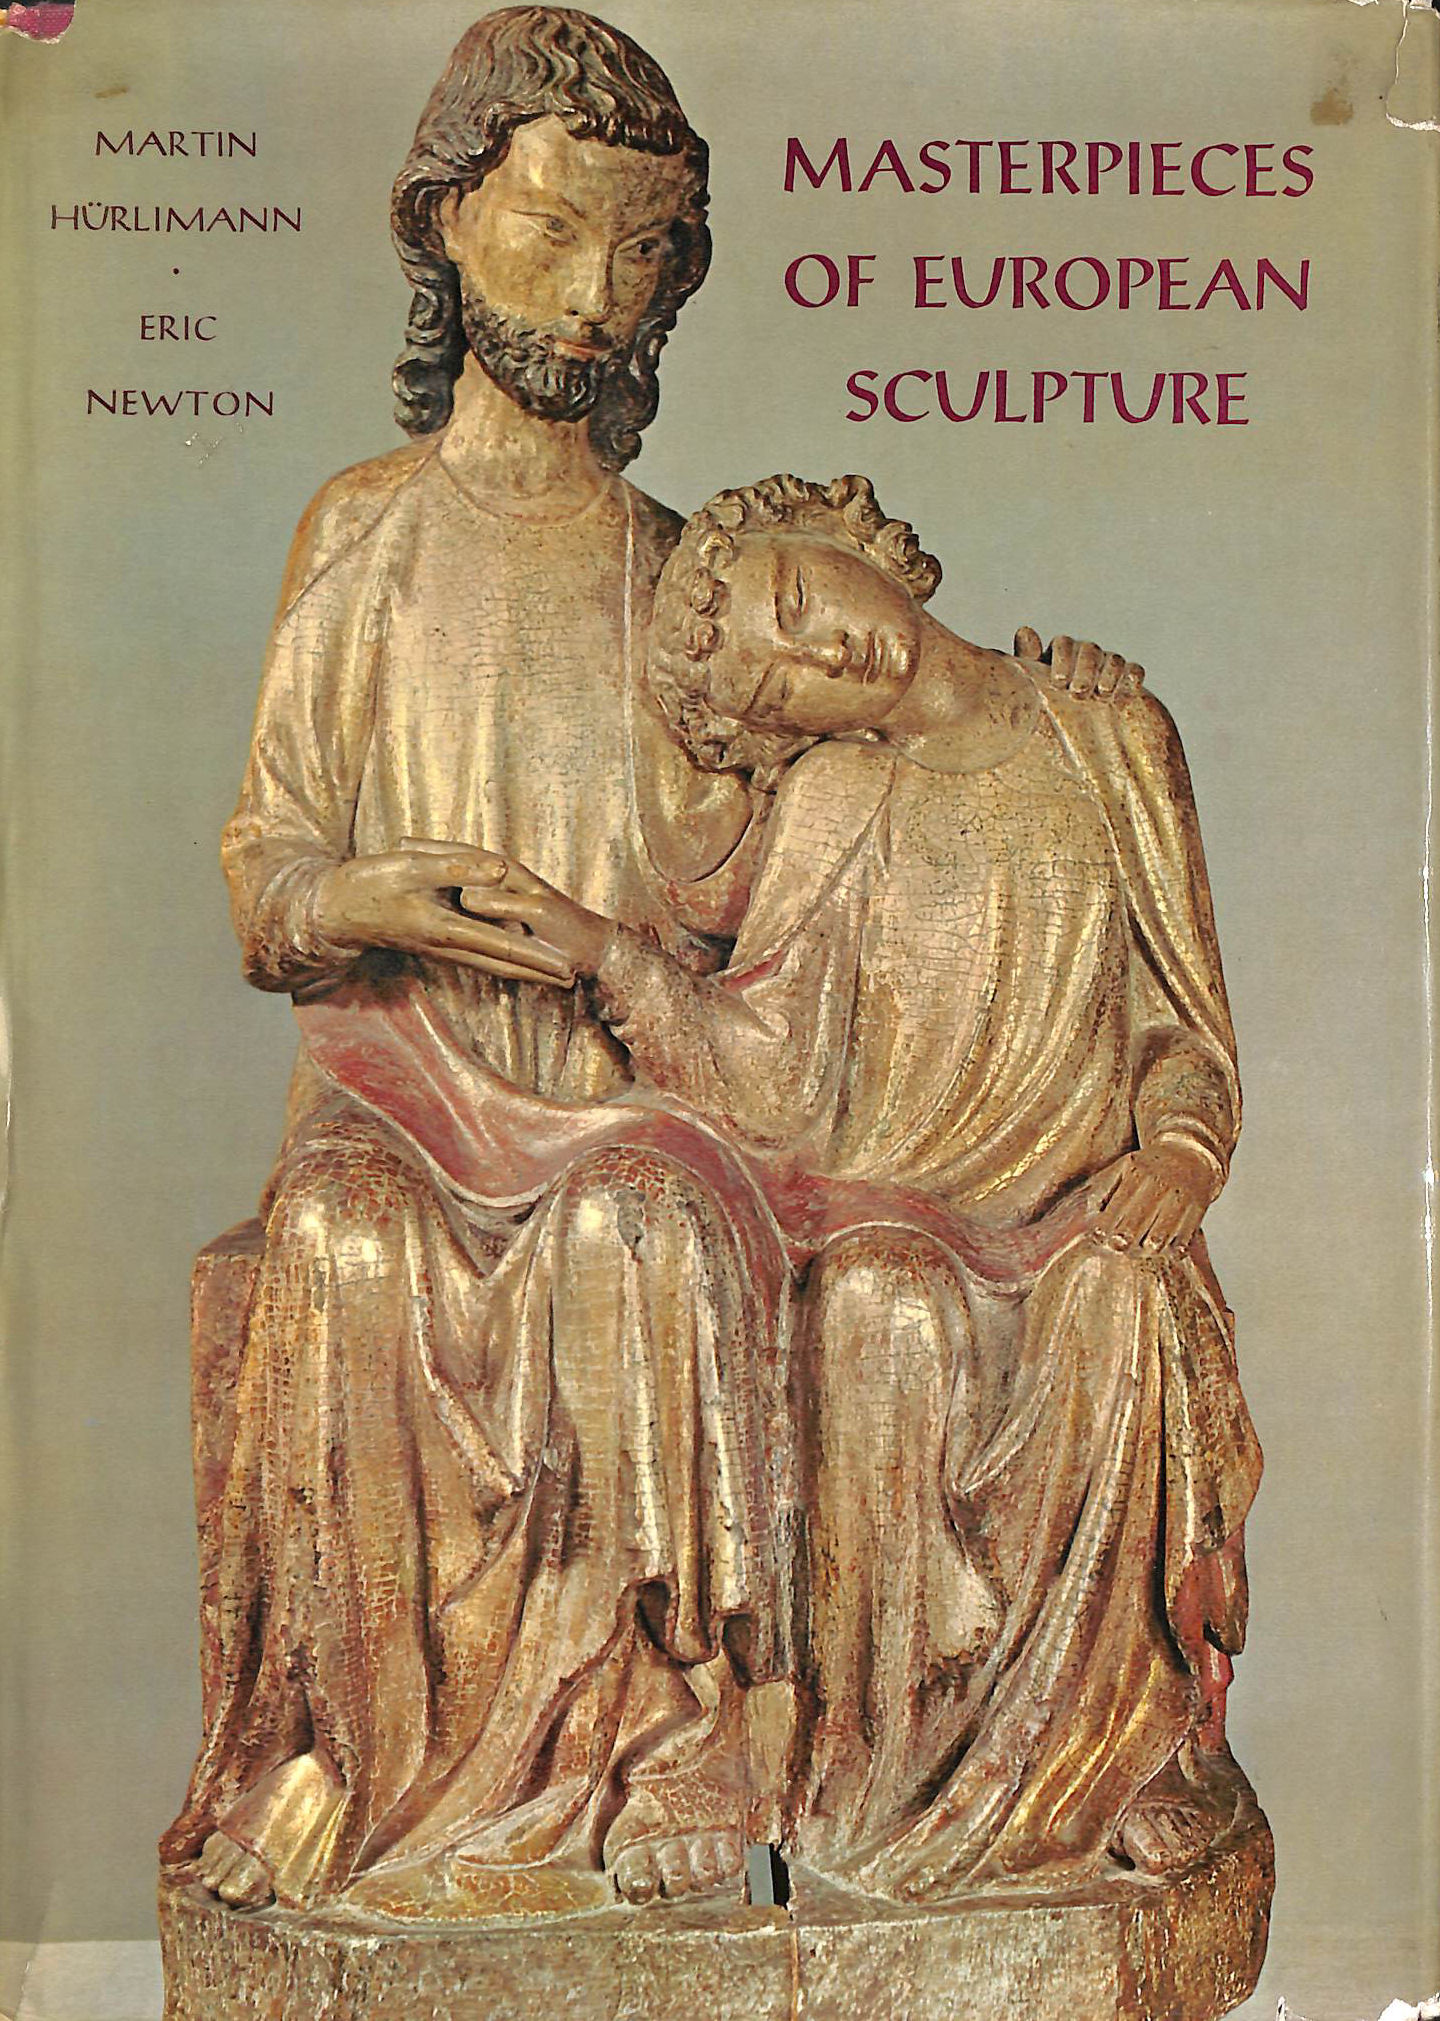 MARTIN HURLIMANN; ERIC NEWTON - Masterpieces of European Sculpture